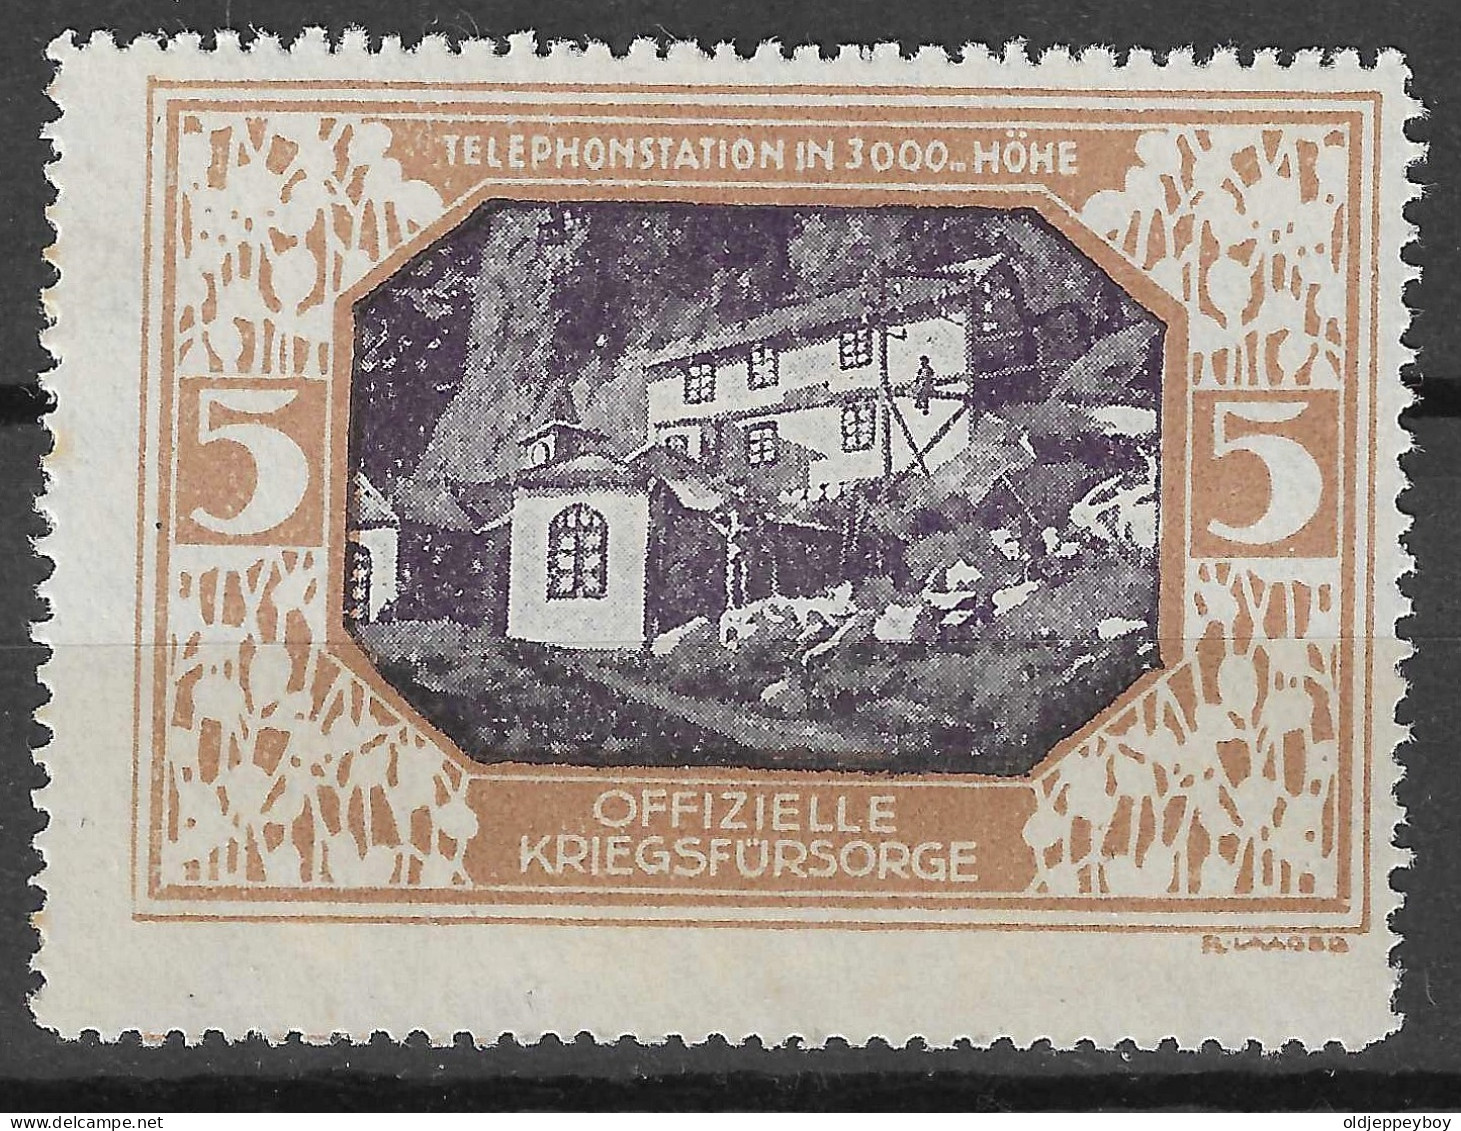 Ca 1900 Germany/Austria/Hungary Cinderella Vignette  Reklamemarke Offizielle Kriegsfürsorge TELEPHONSTATION IN 3000 HOHE - Erinofilia